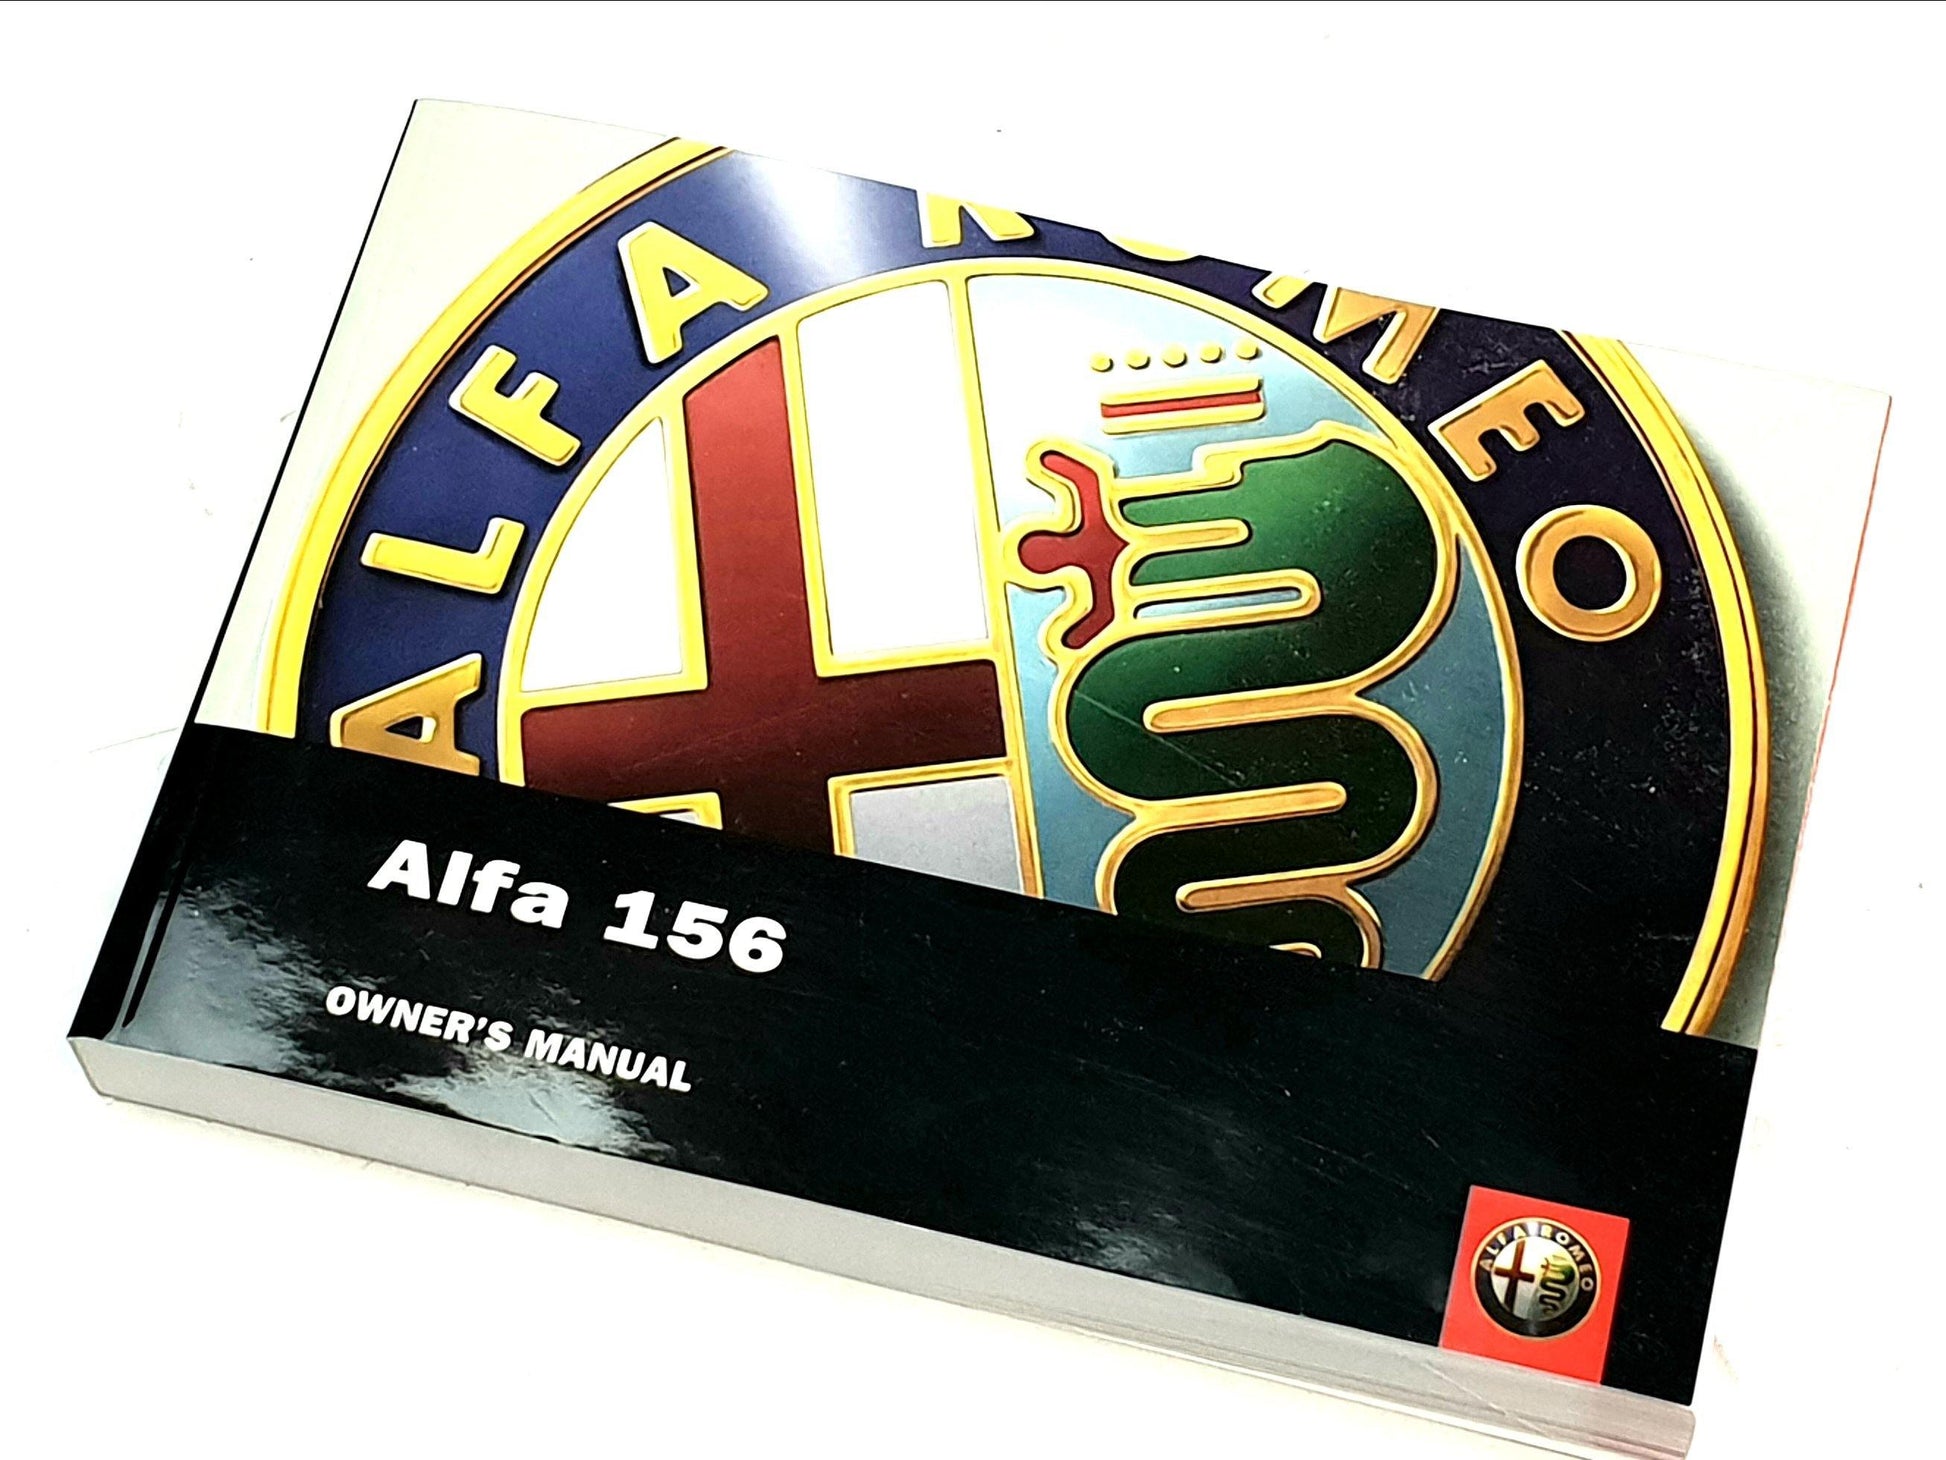 Owners Handbook - 156 2002> - Alfa Romeo Genuine Parts Shop